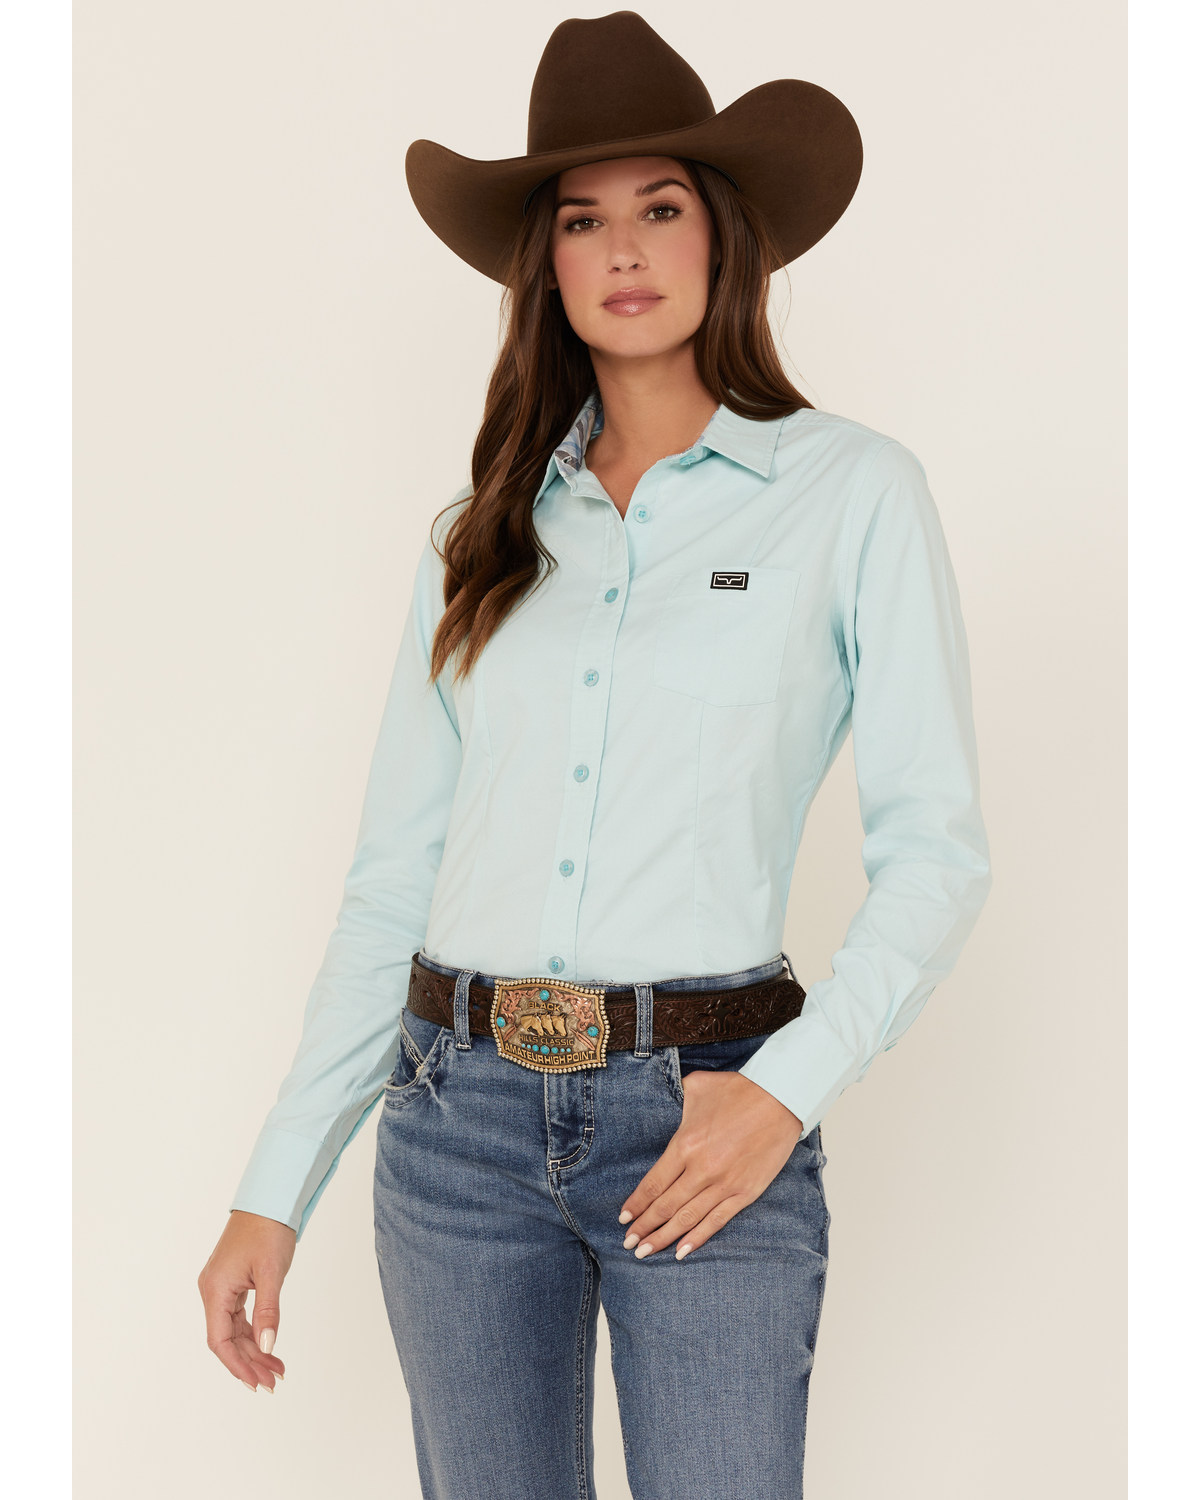 Kimes Ranch Women's Linville Long Sleeve Western Button Down Shirt